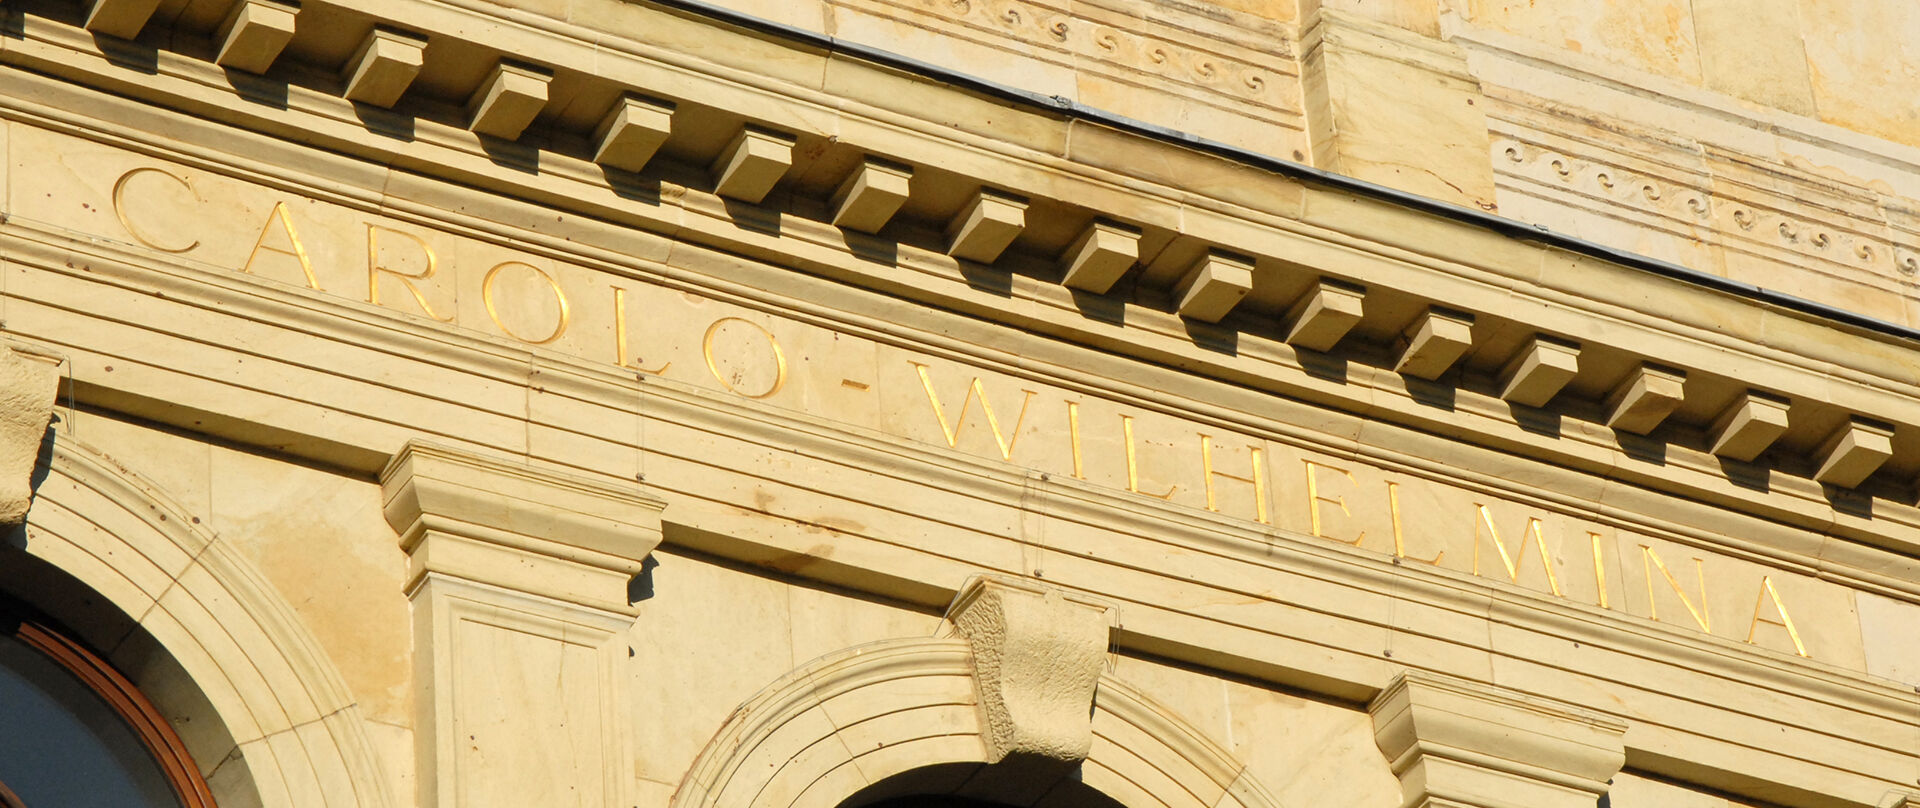 Carolo-Wilhelmina Schriftzug am Altgebäude